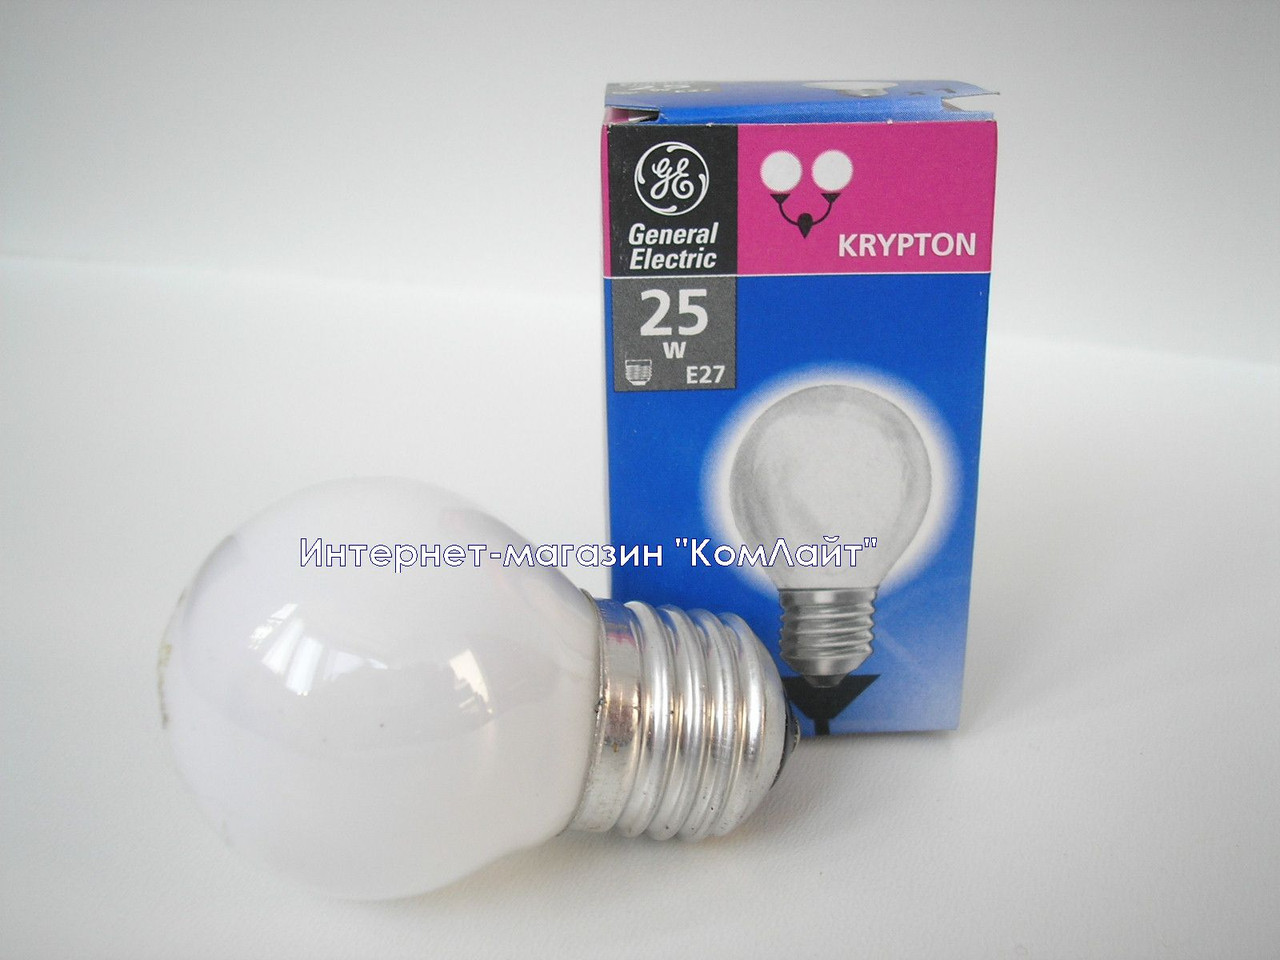 Криптонова лампа General Electric 25KD1/E27 230V KRYPTON кулька (Угорщина)